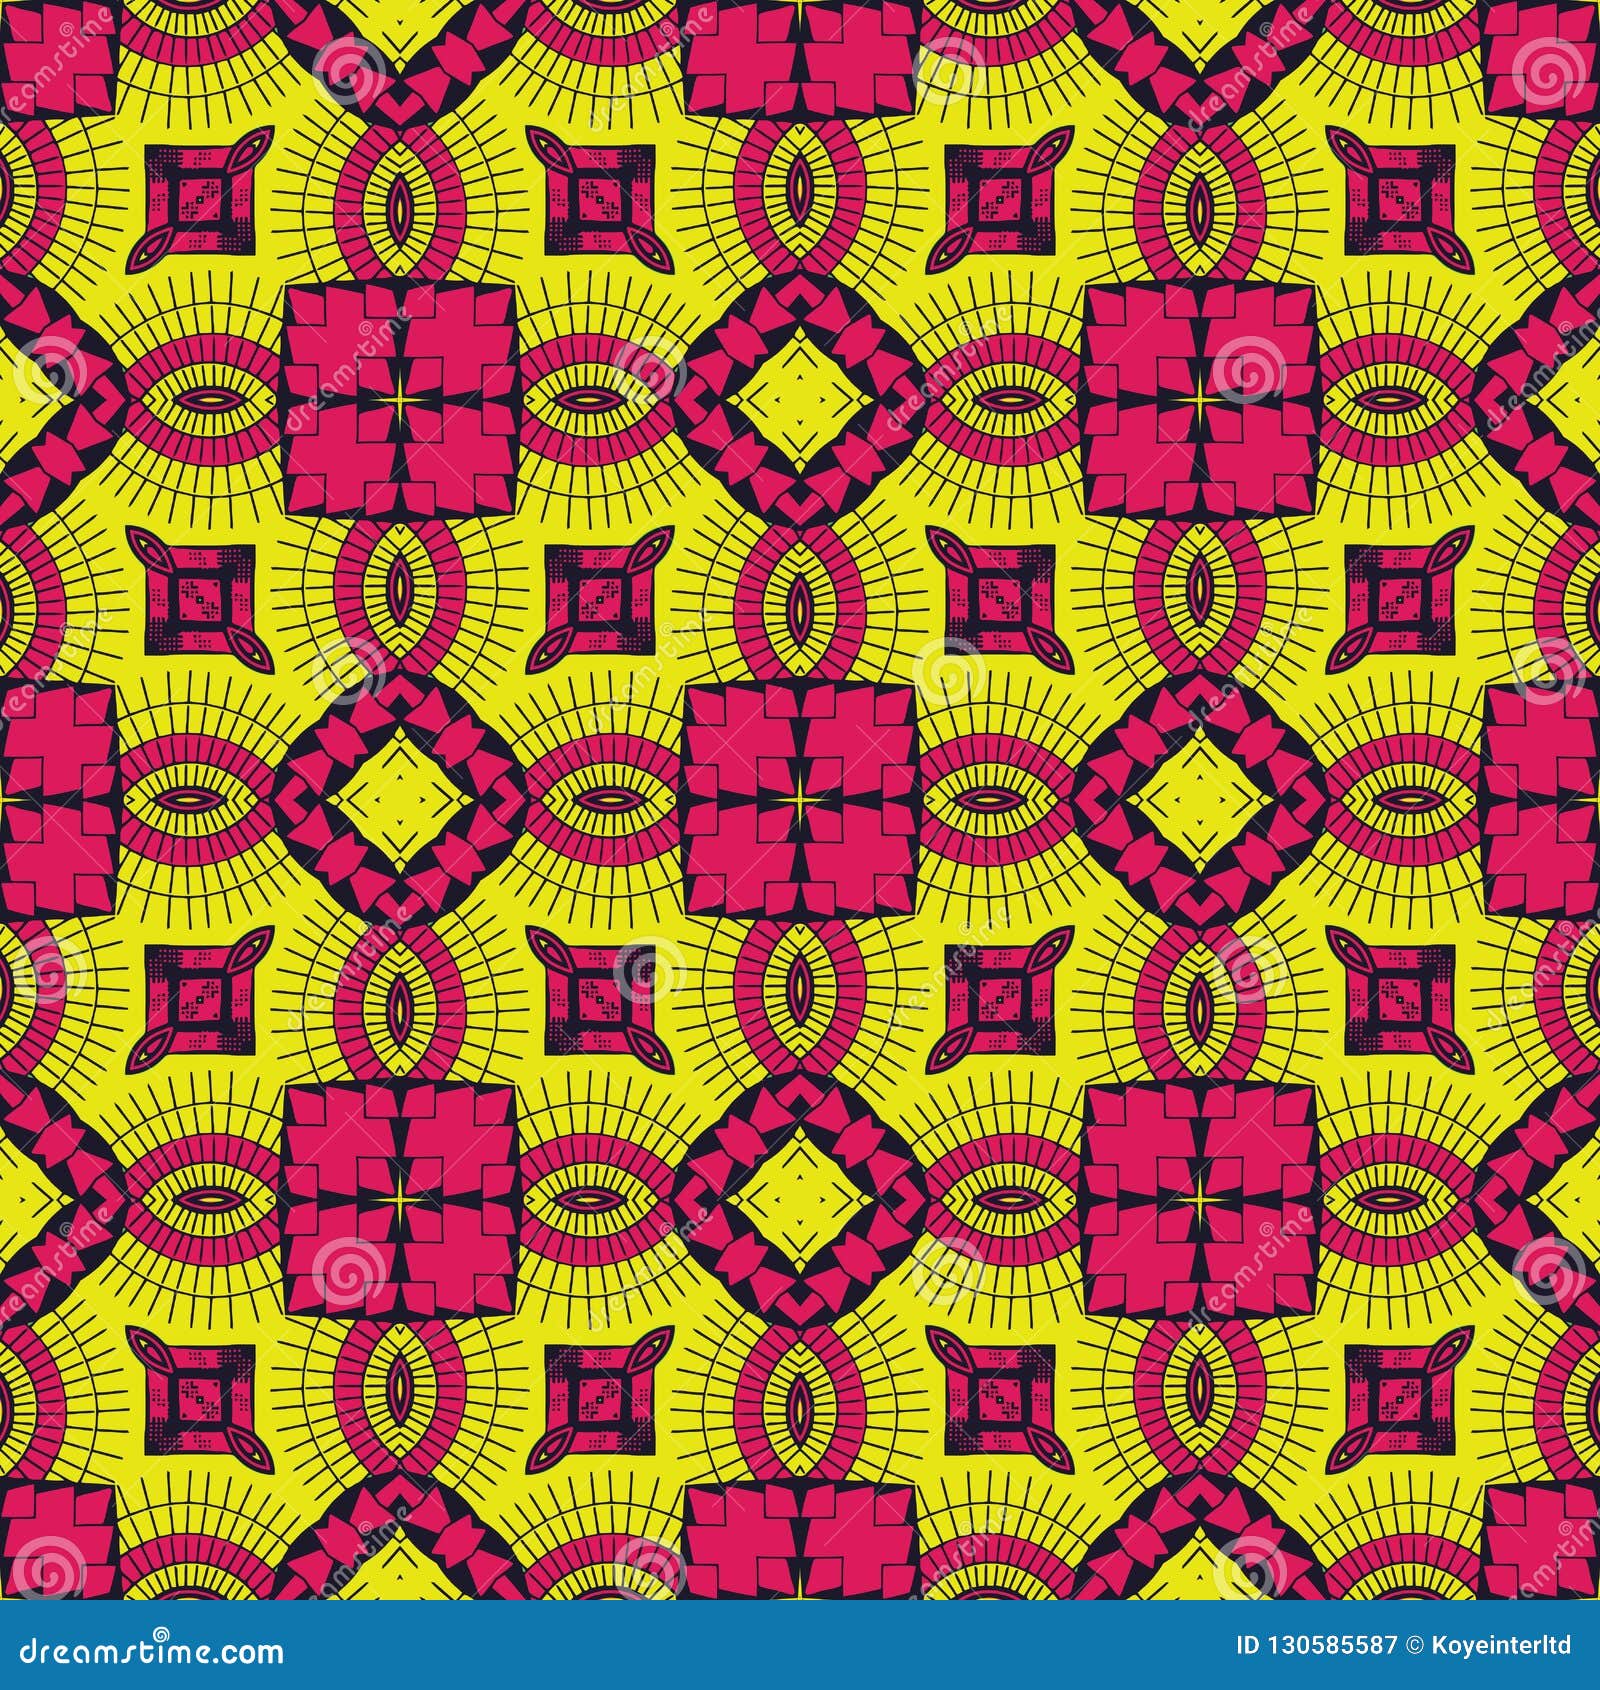 Africa fabric Africa print fabric Africa clothing Africa wax print Ankara fabric